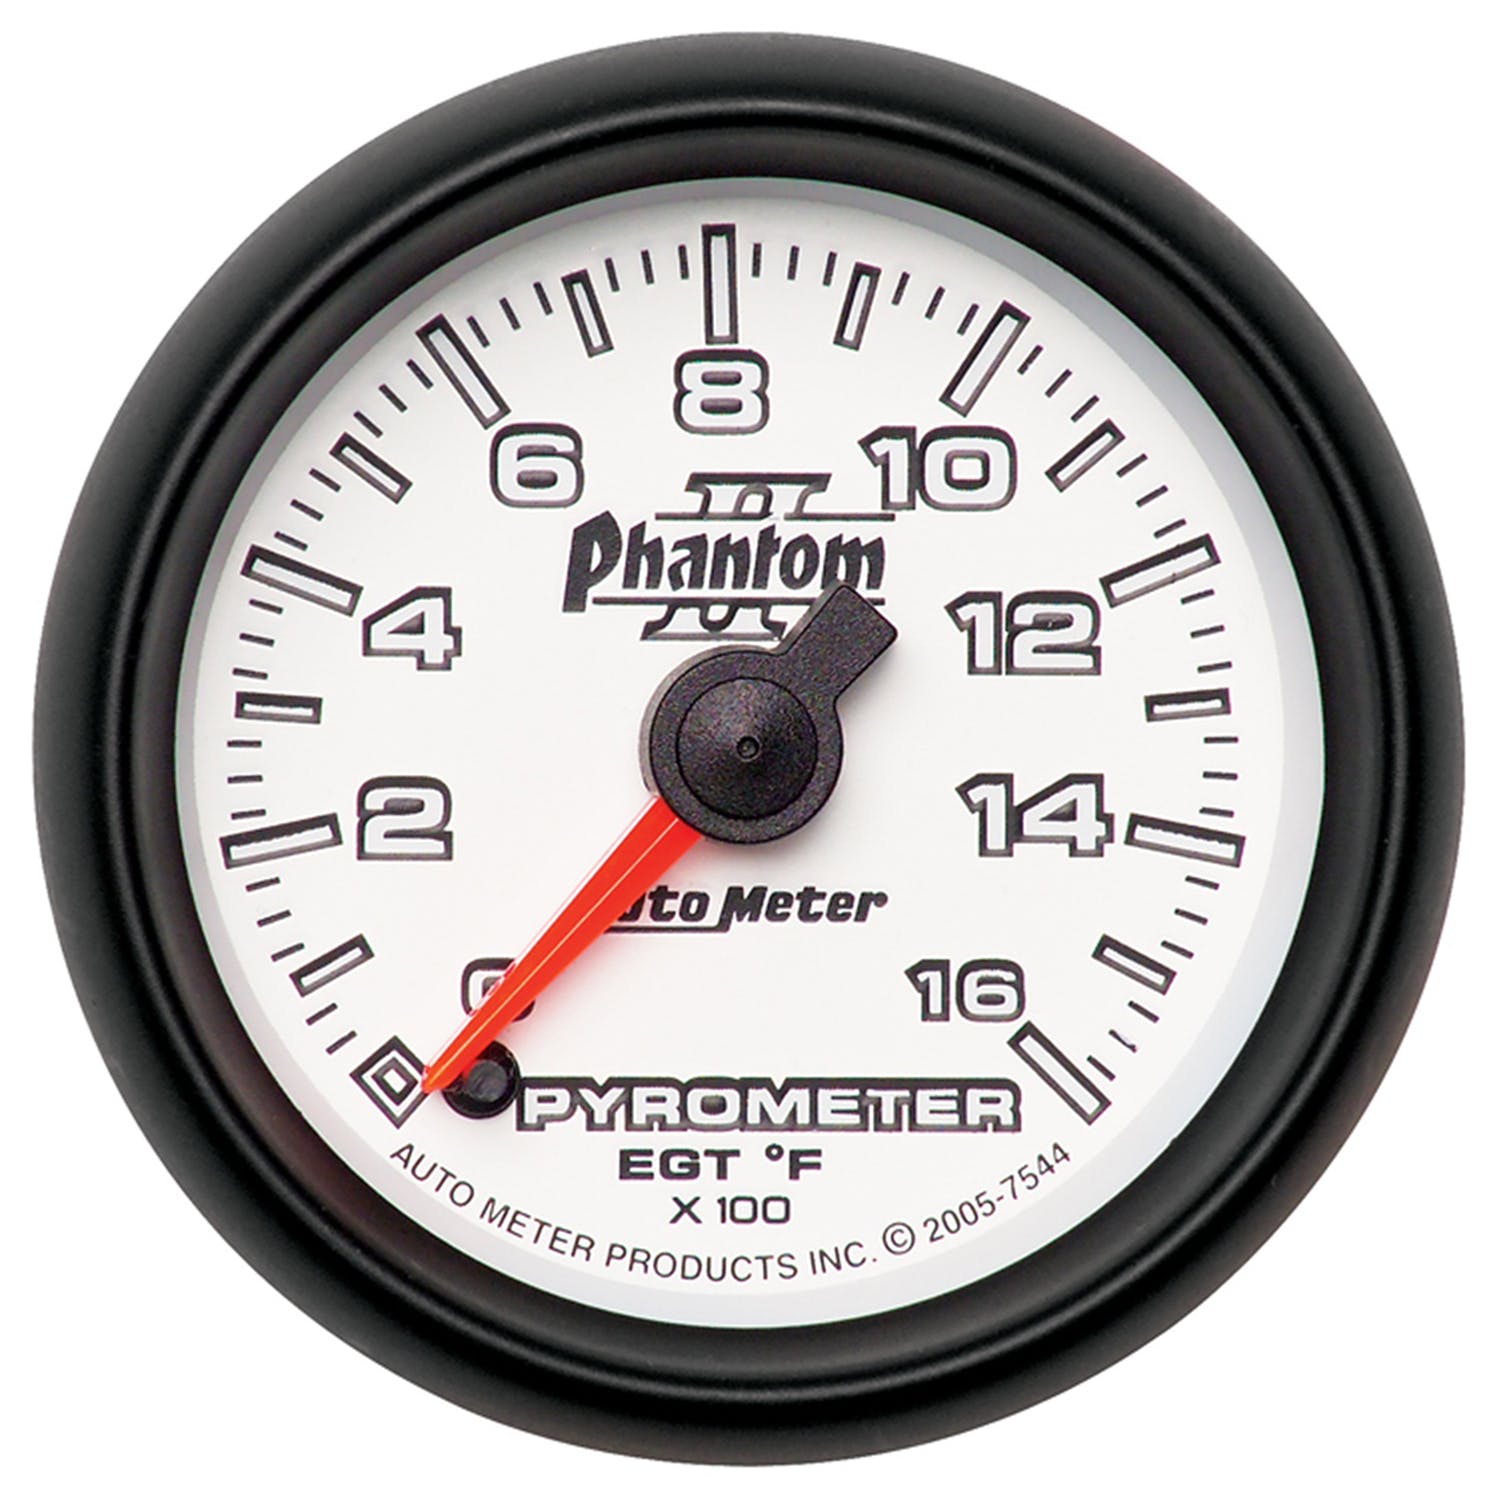 AutoMeter Products 7544 Pyrometer Kit 0-1600 (FS)